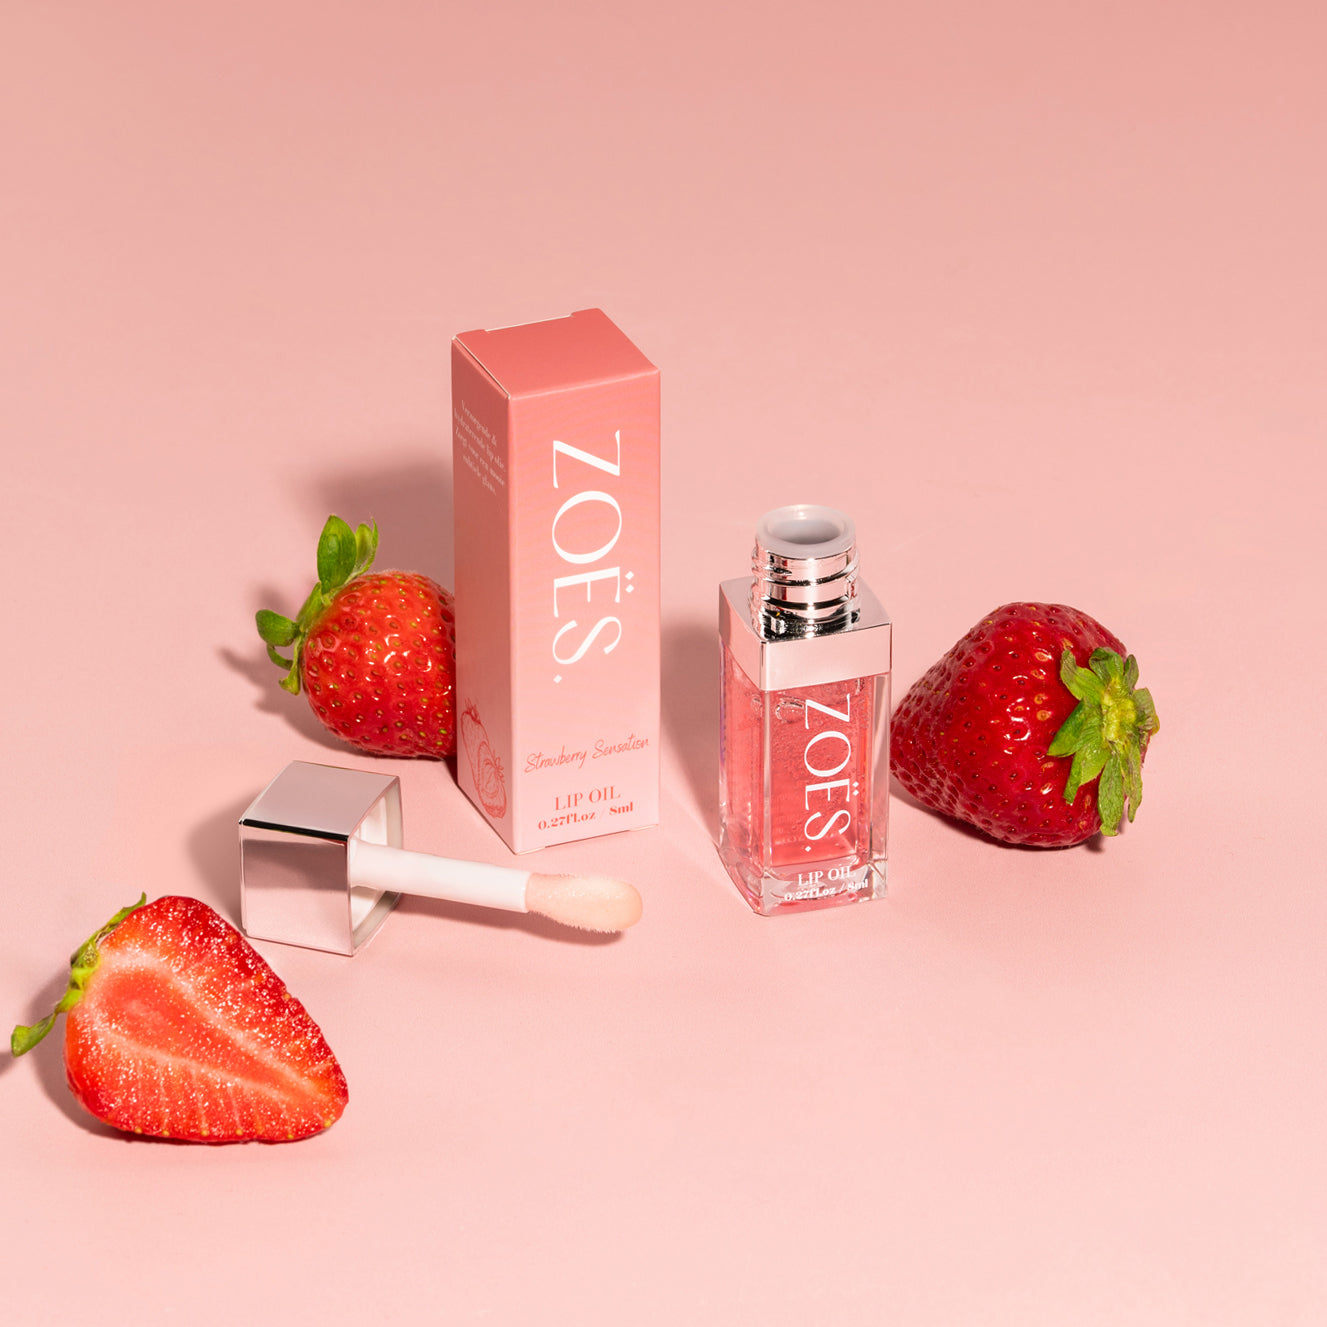 Lip oil - Strawberry Sensation